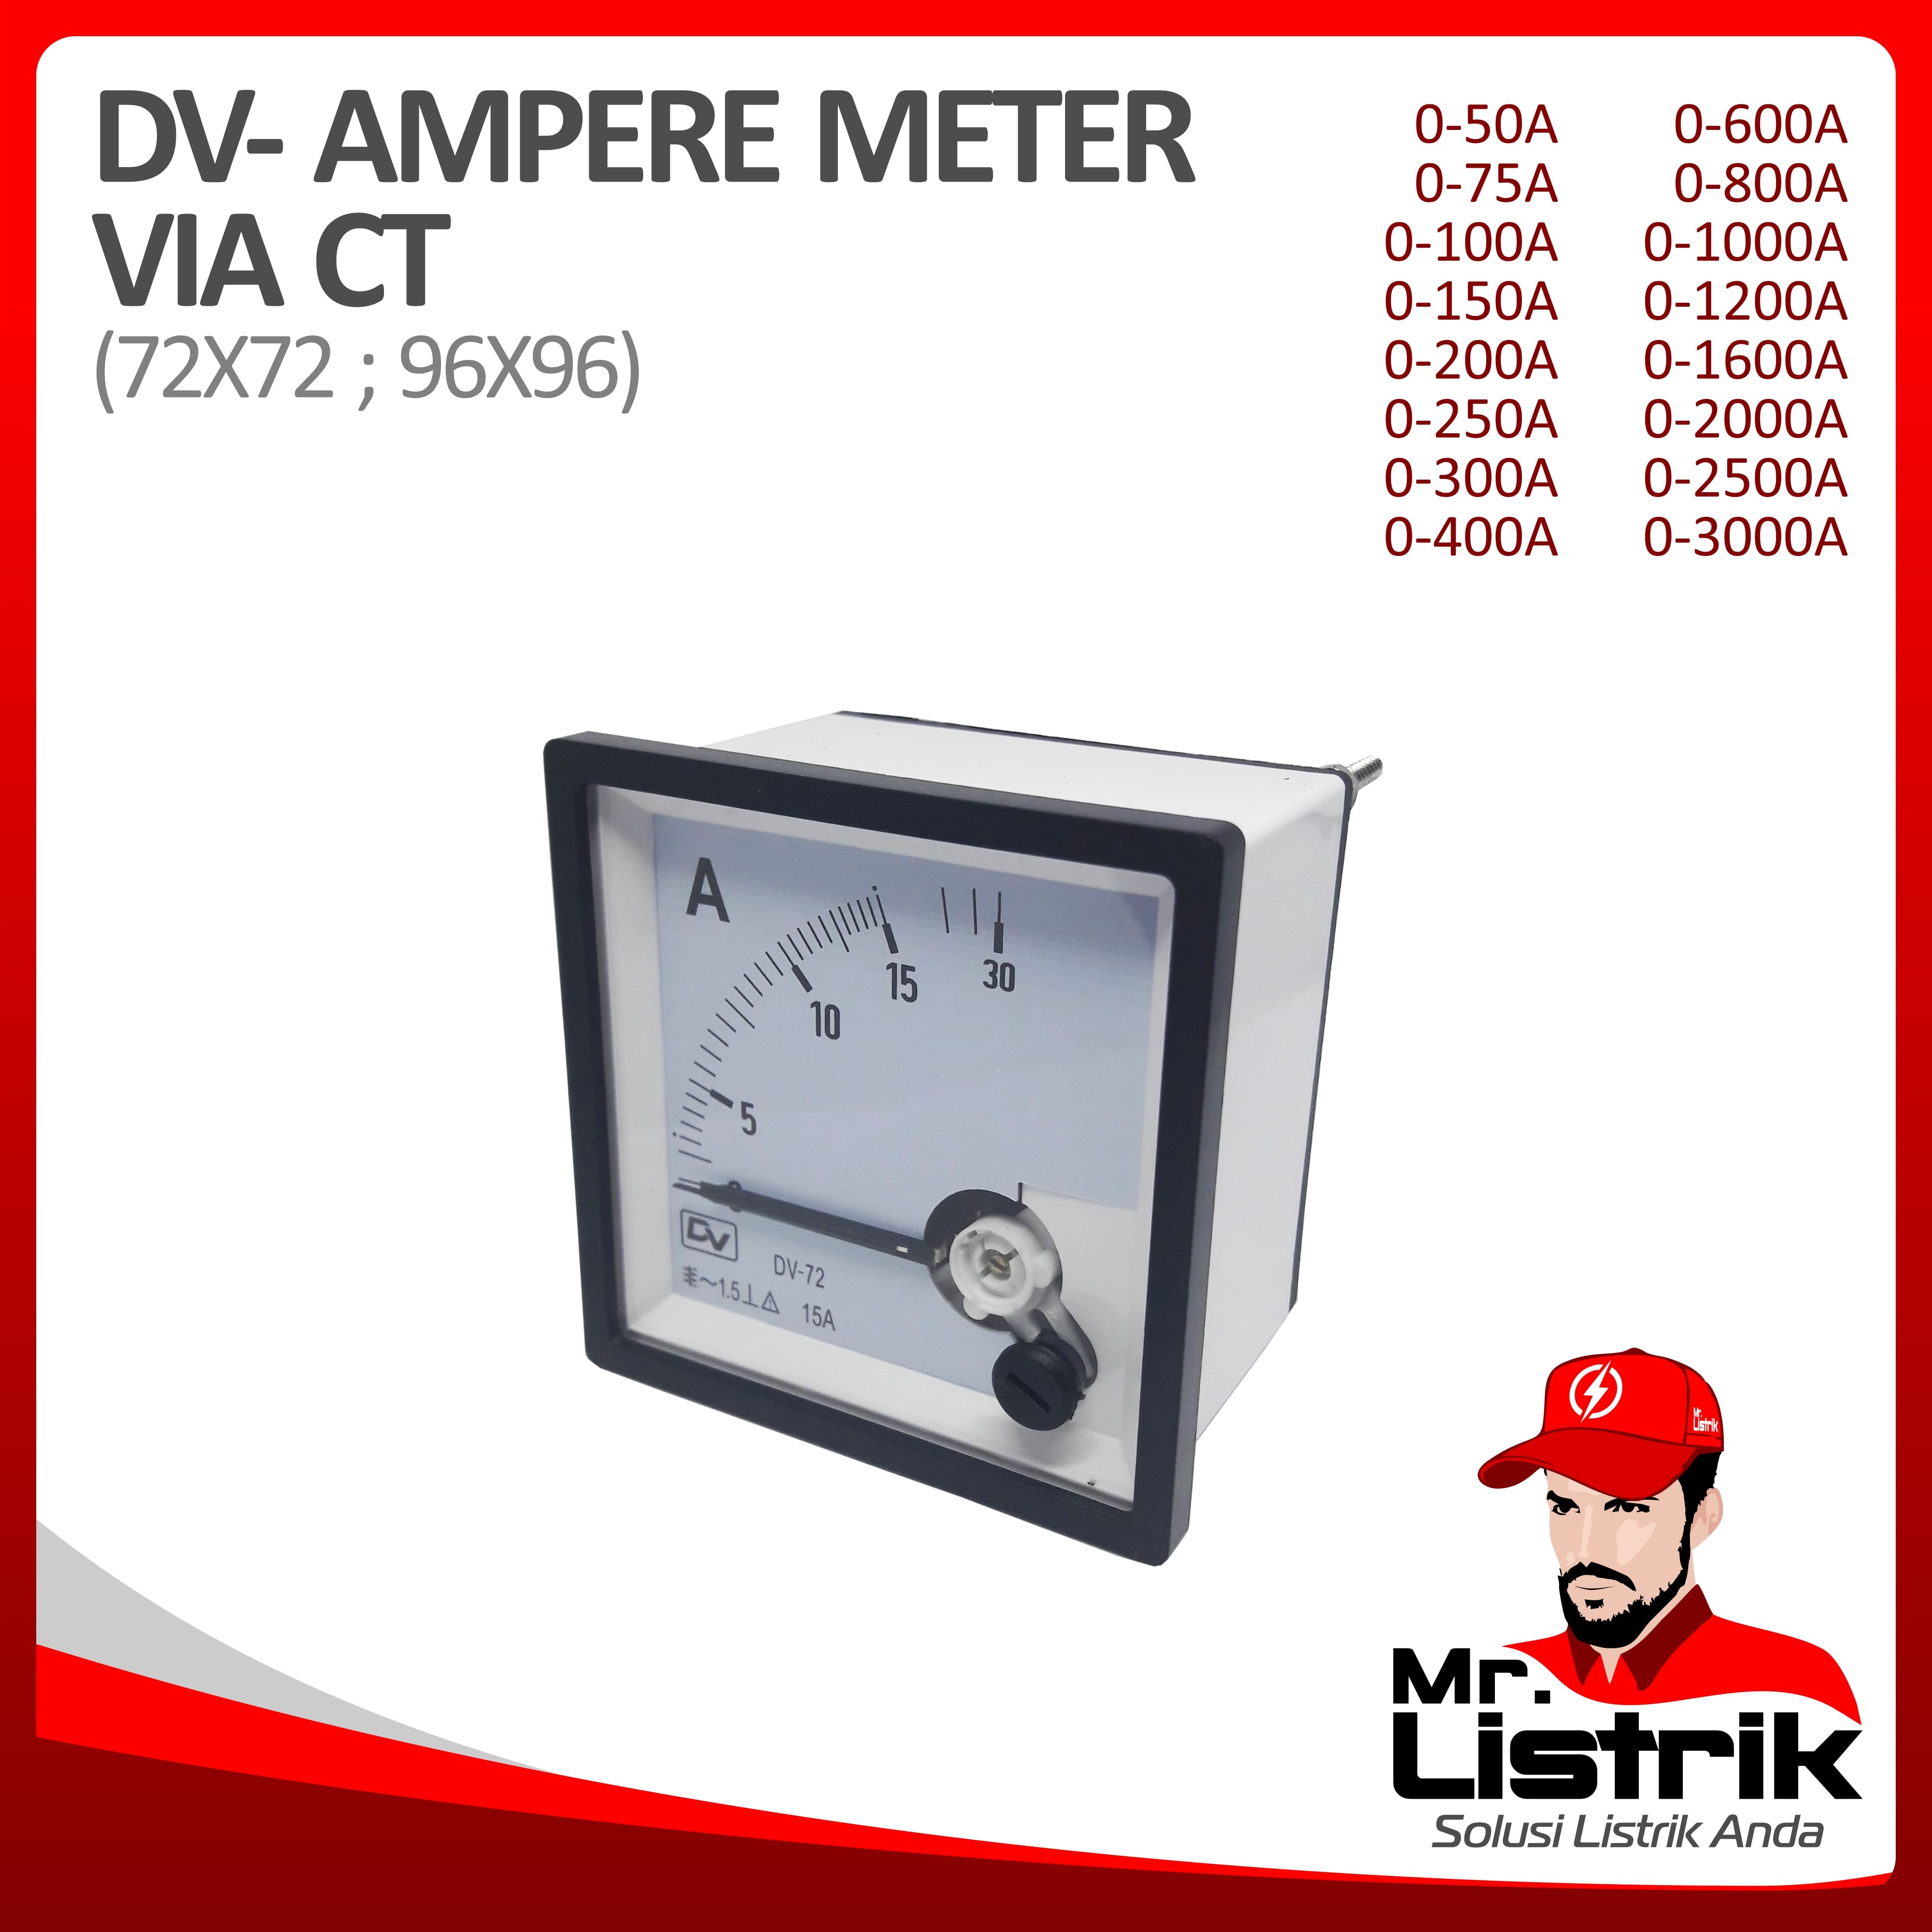 Amperemeter Via CT DV 96x96 - 1600A